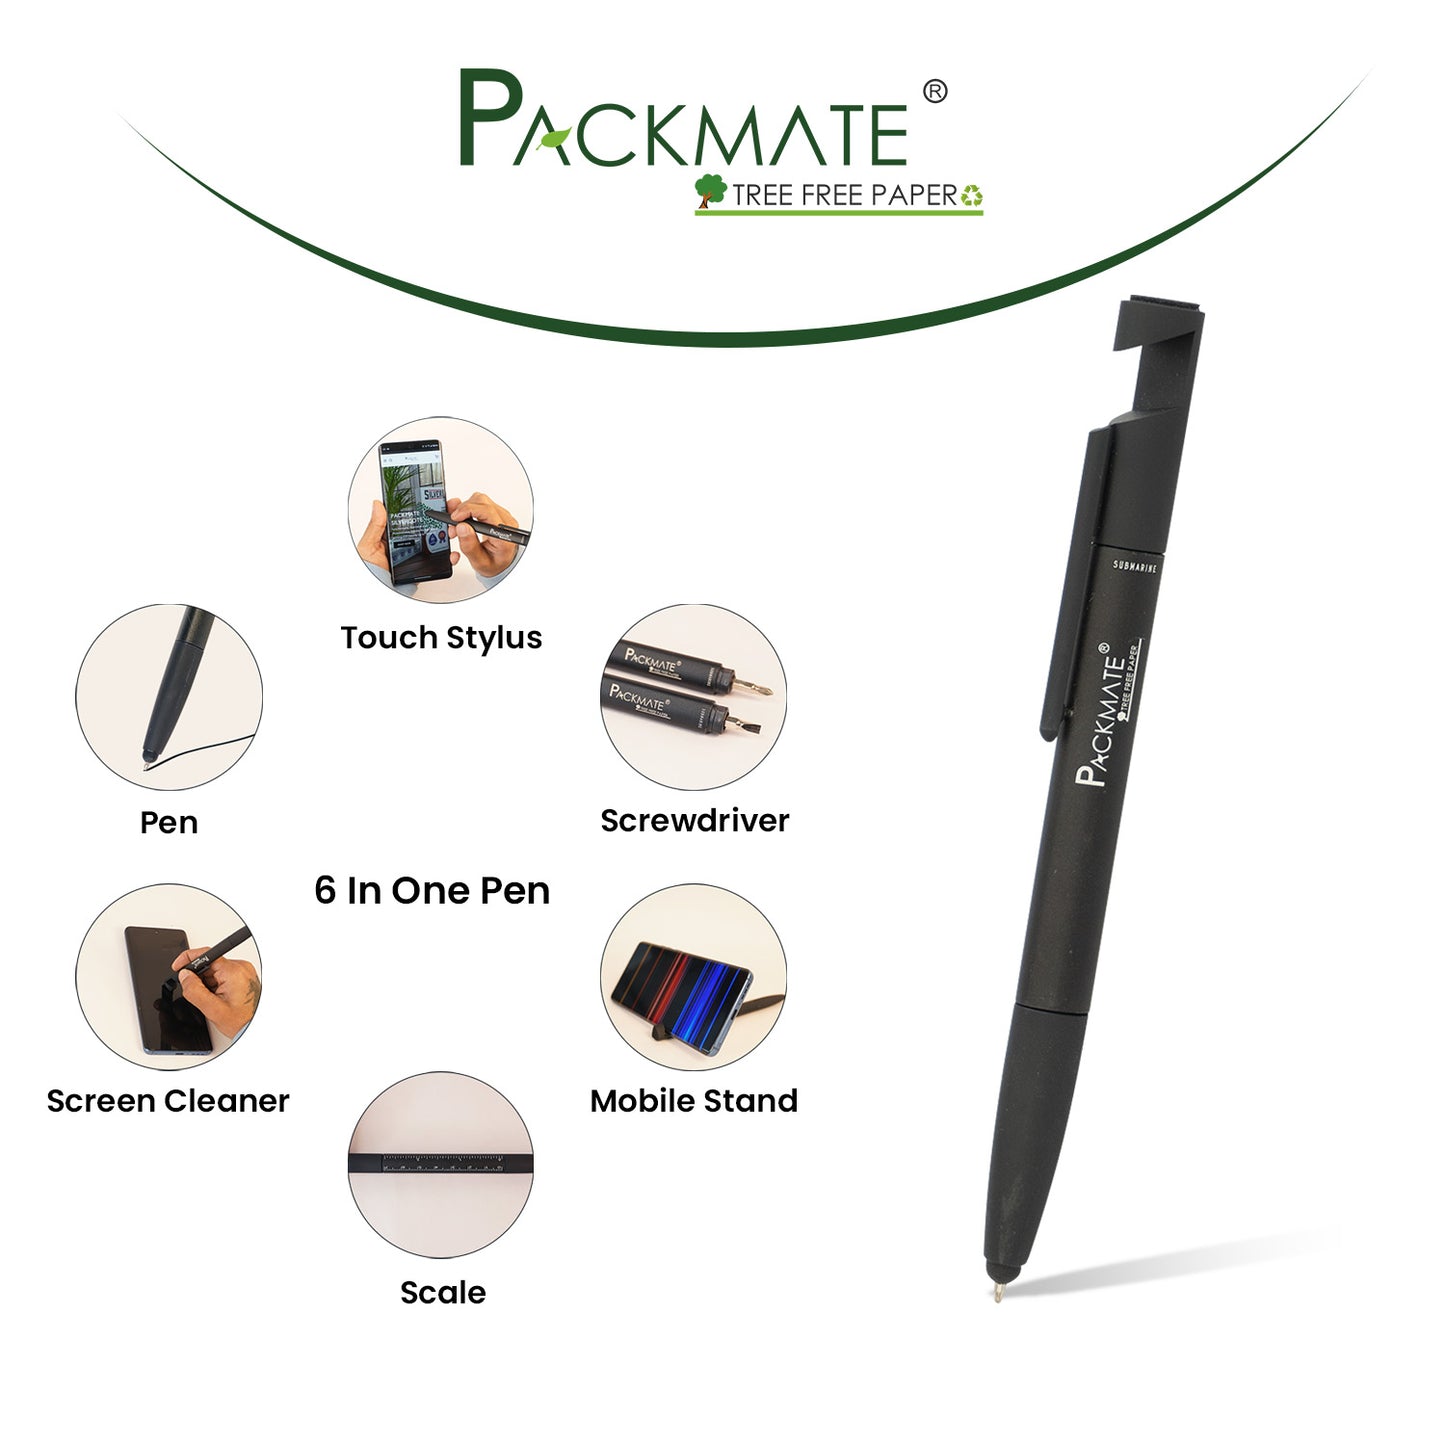 Packmate Multipurpose Pen (Pack of 2)